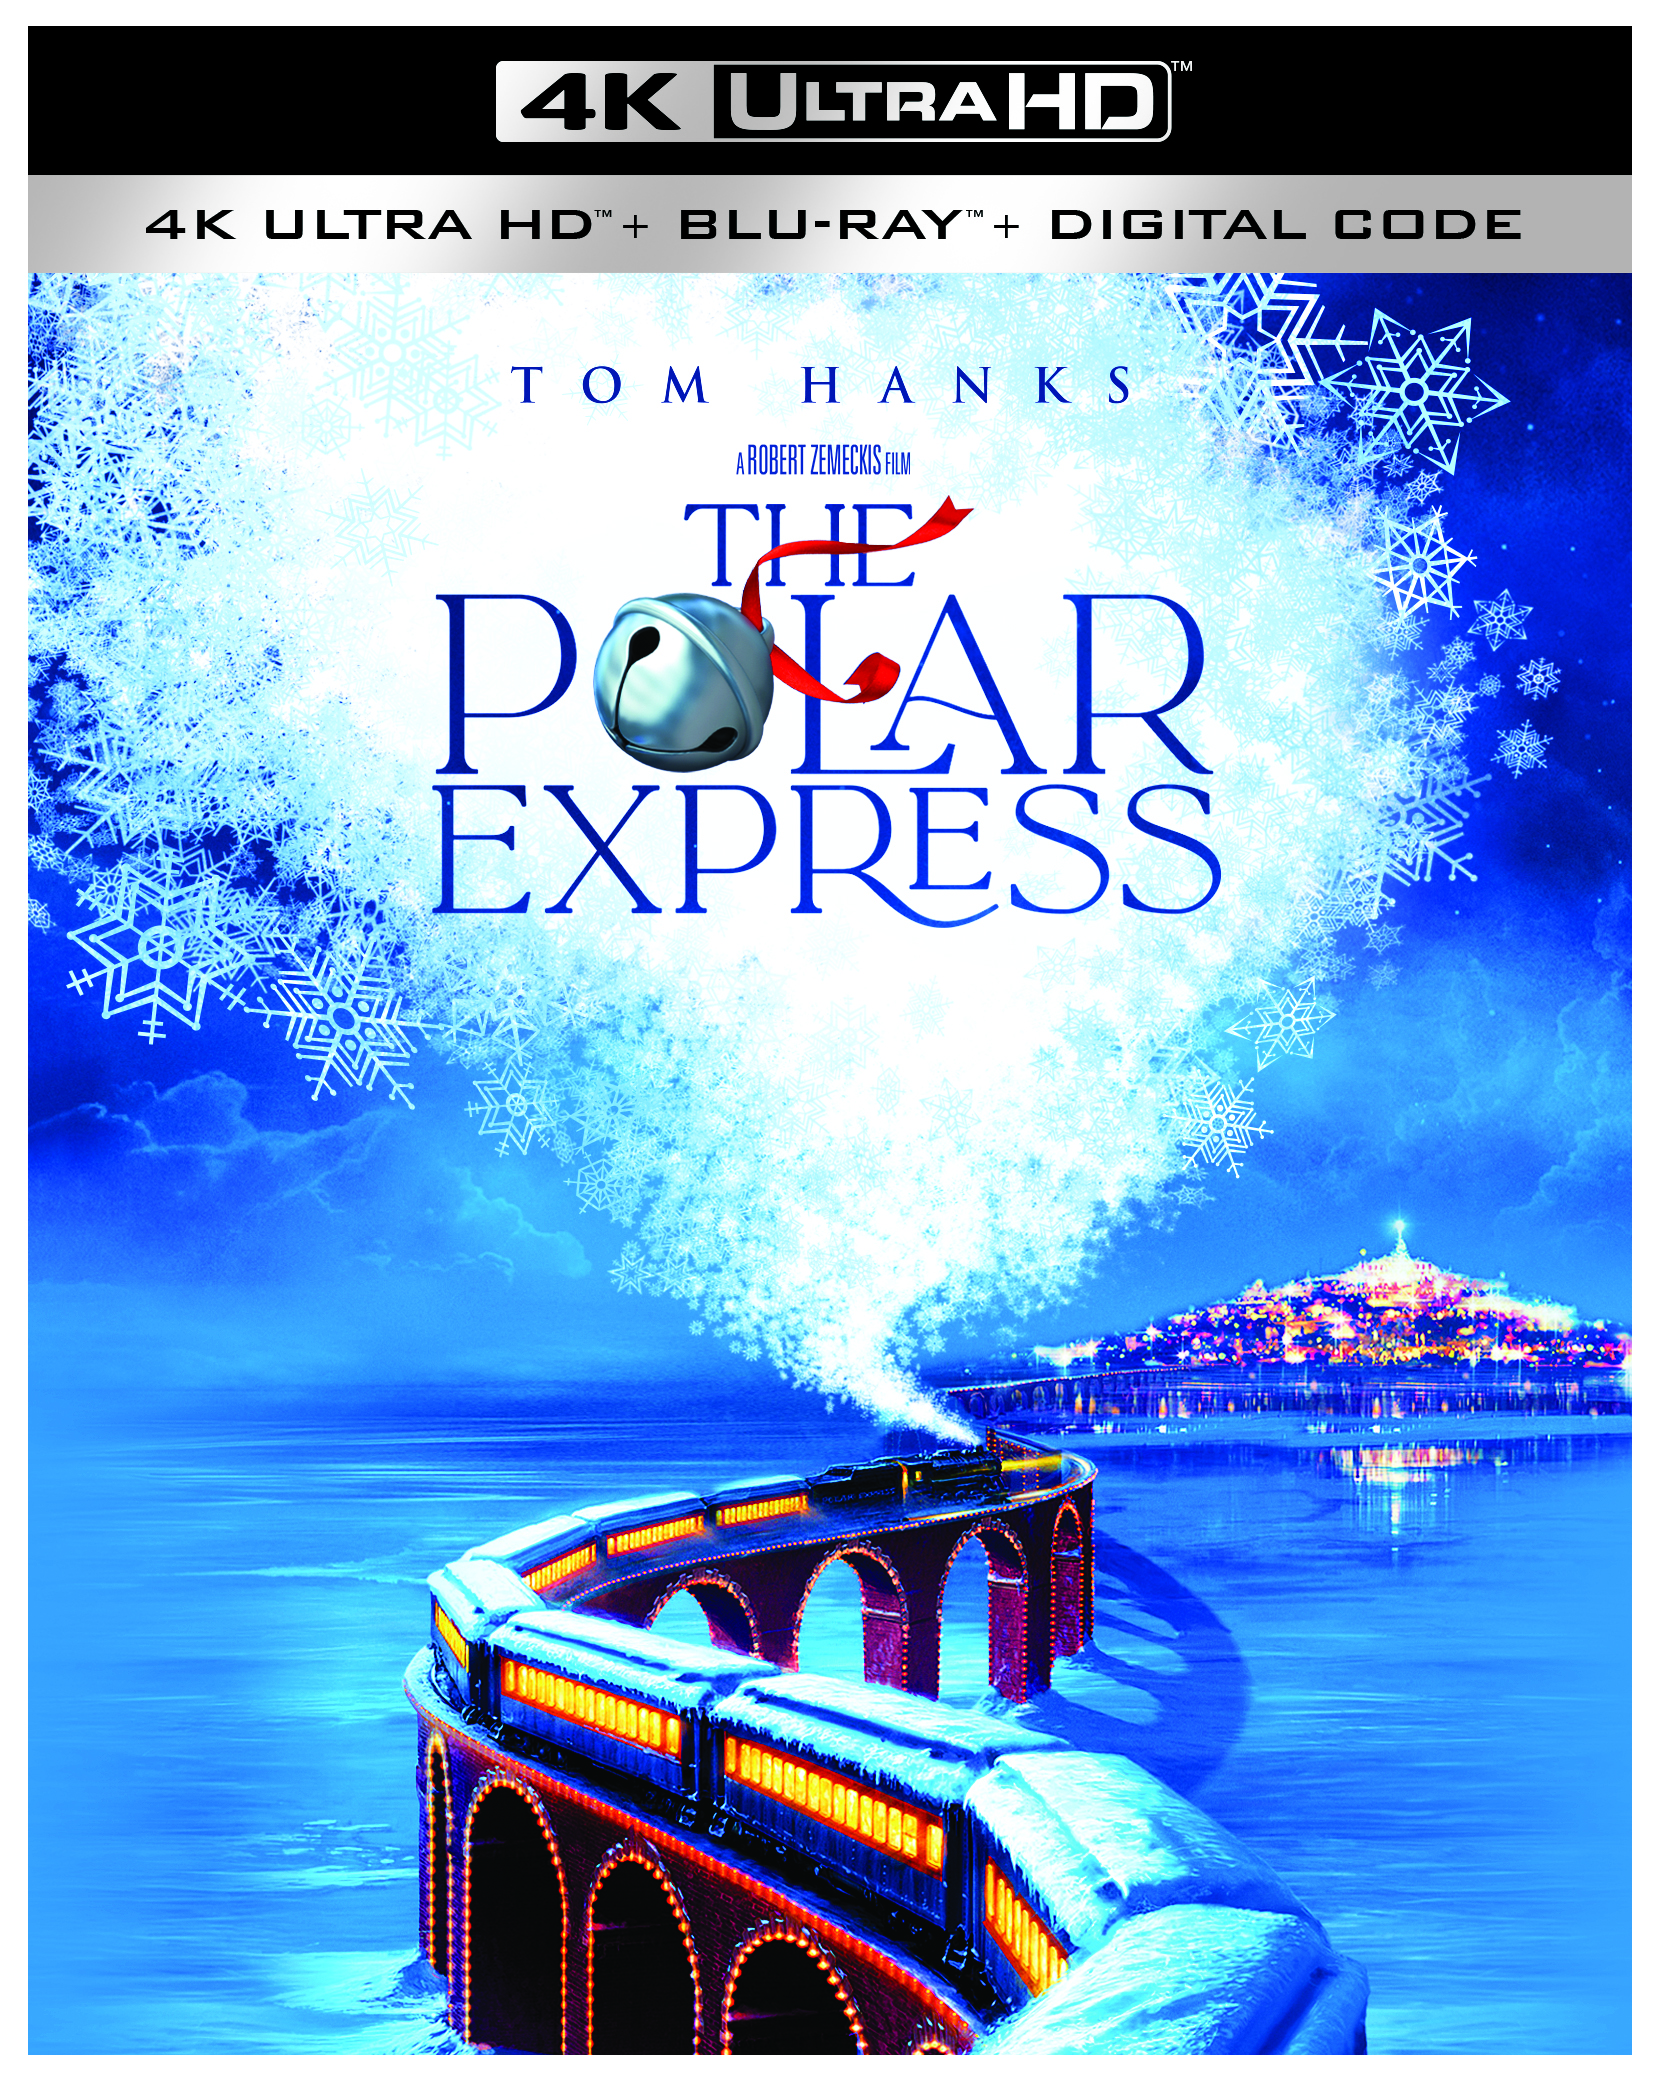 Polar (Movie Review)